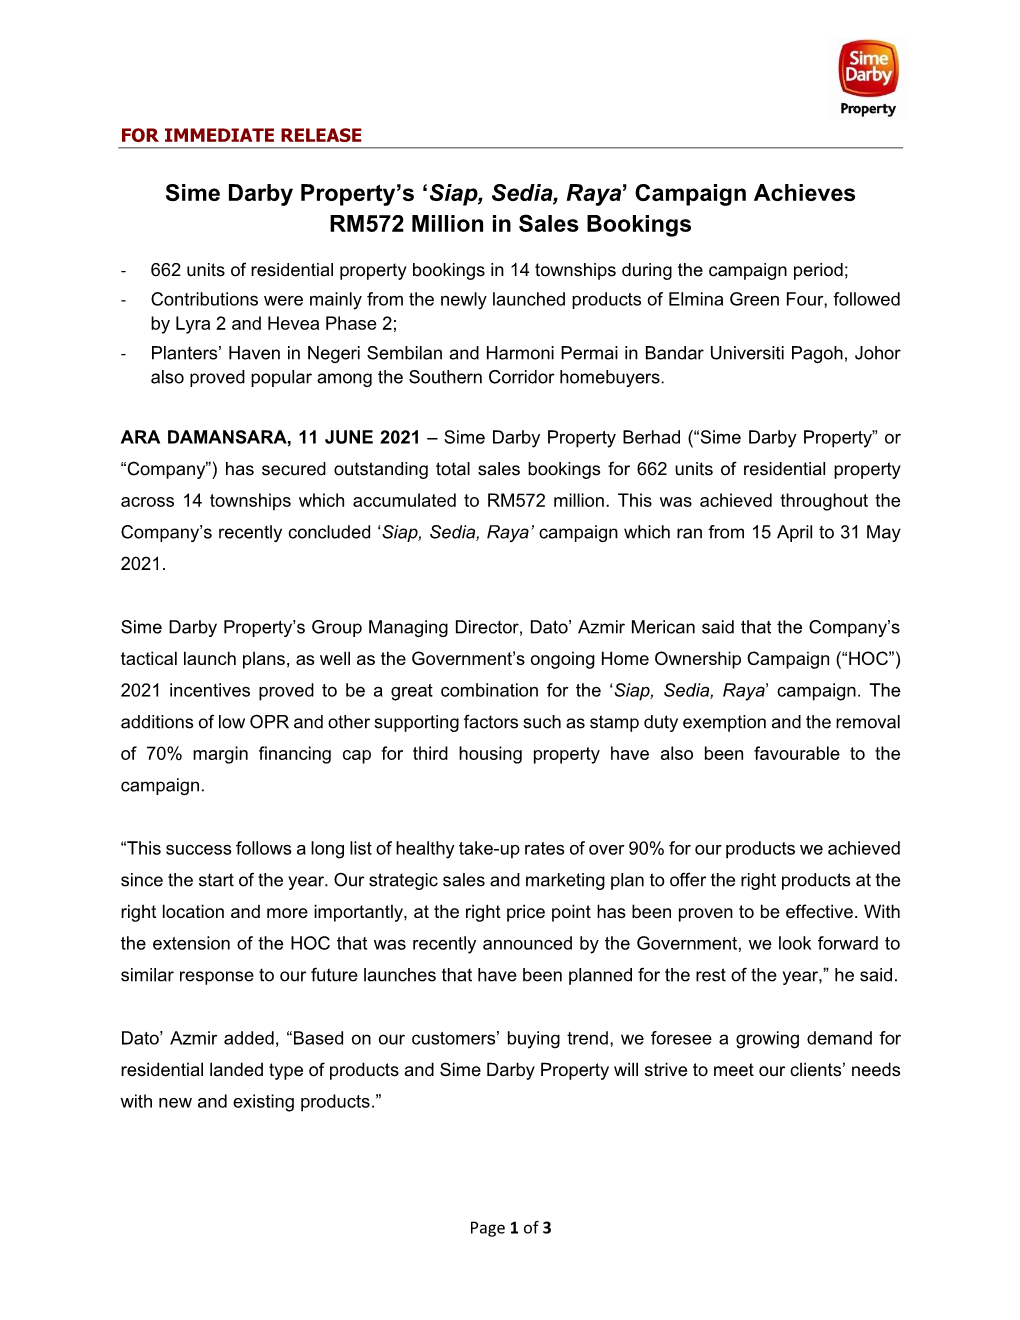 Siap, Sedia, Raya’ Campaign Achieves RM572 Million in Sales Bookings